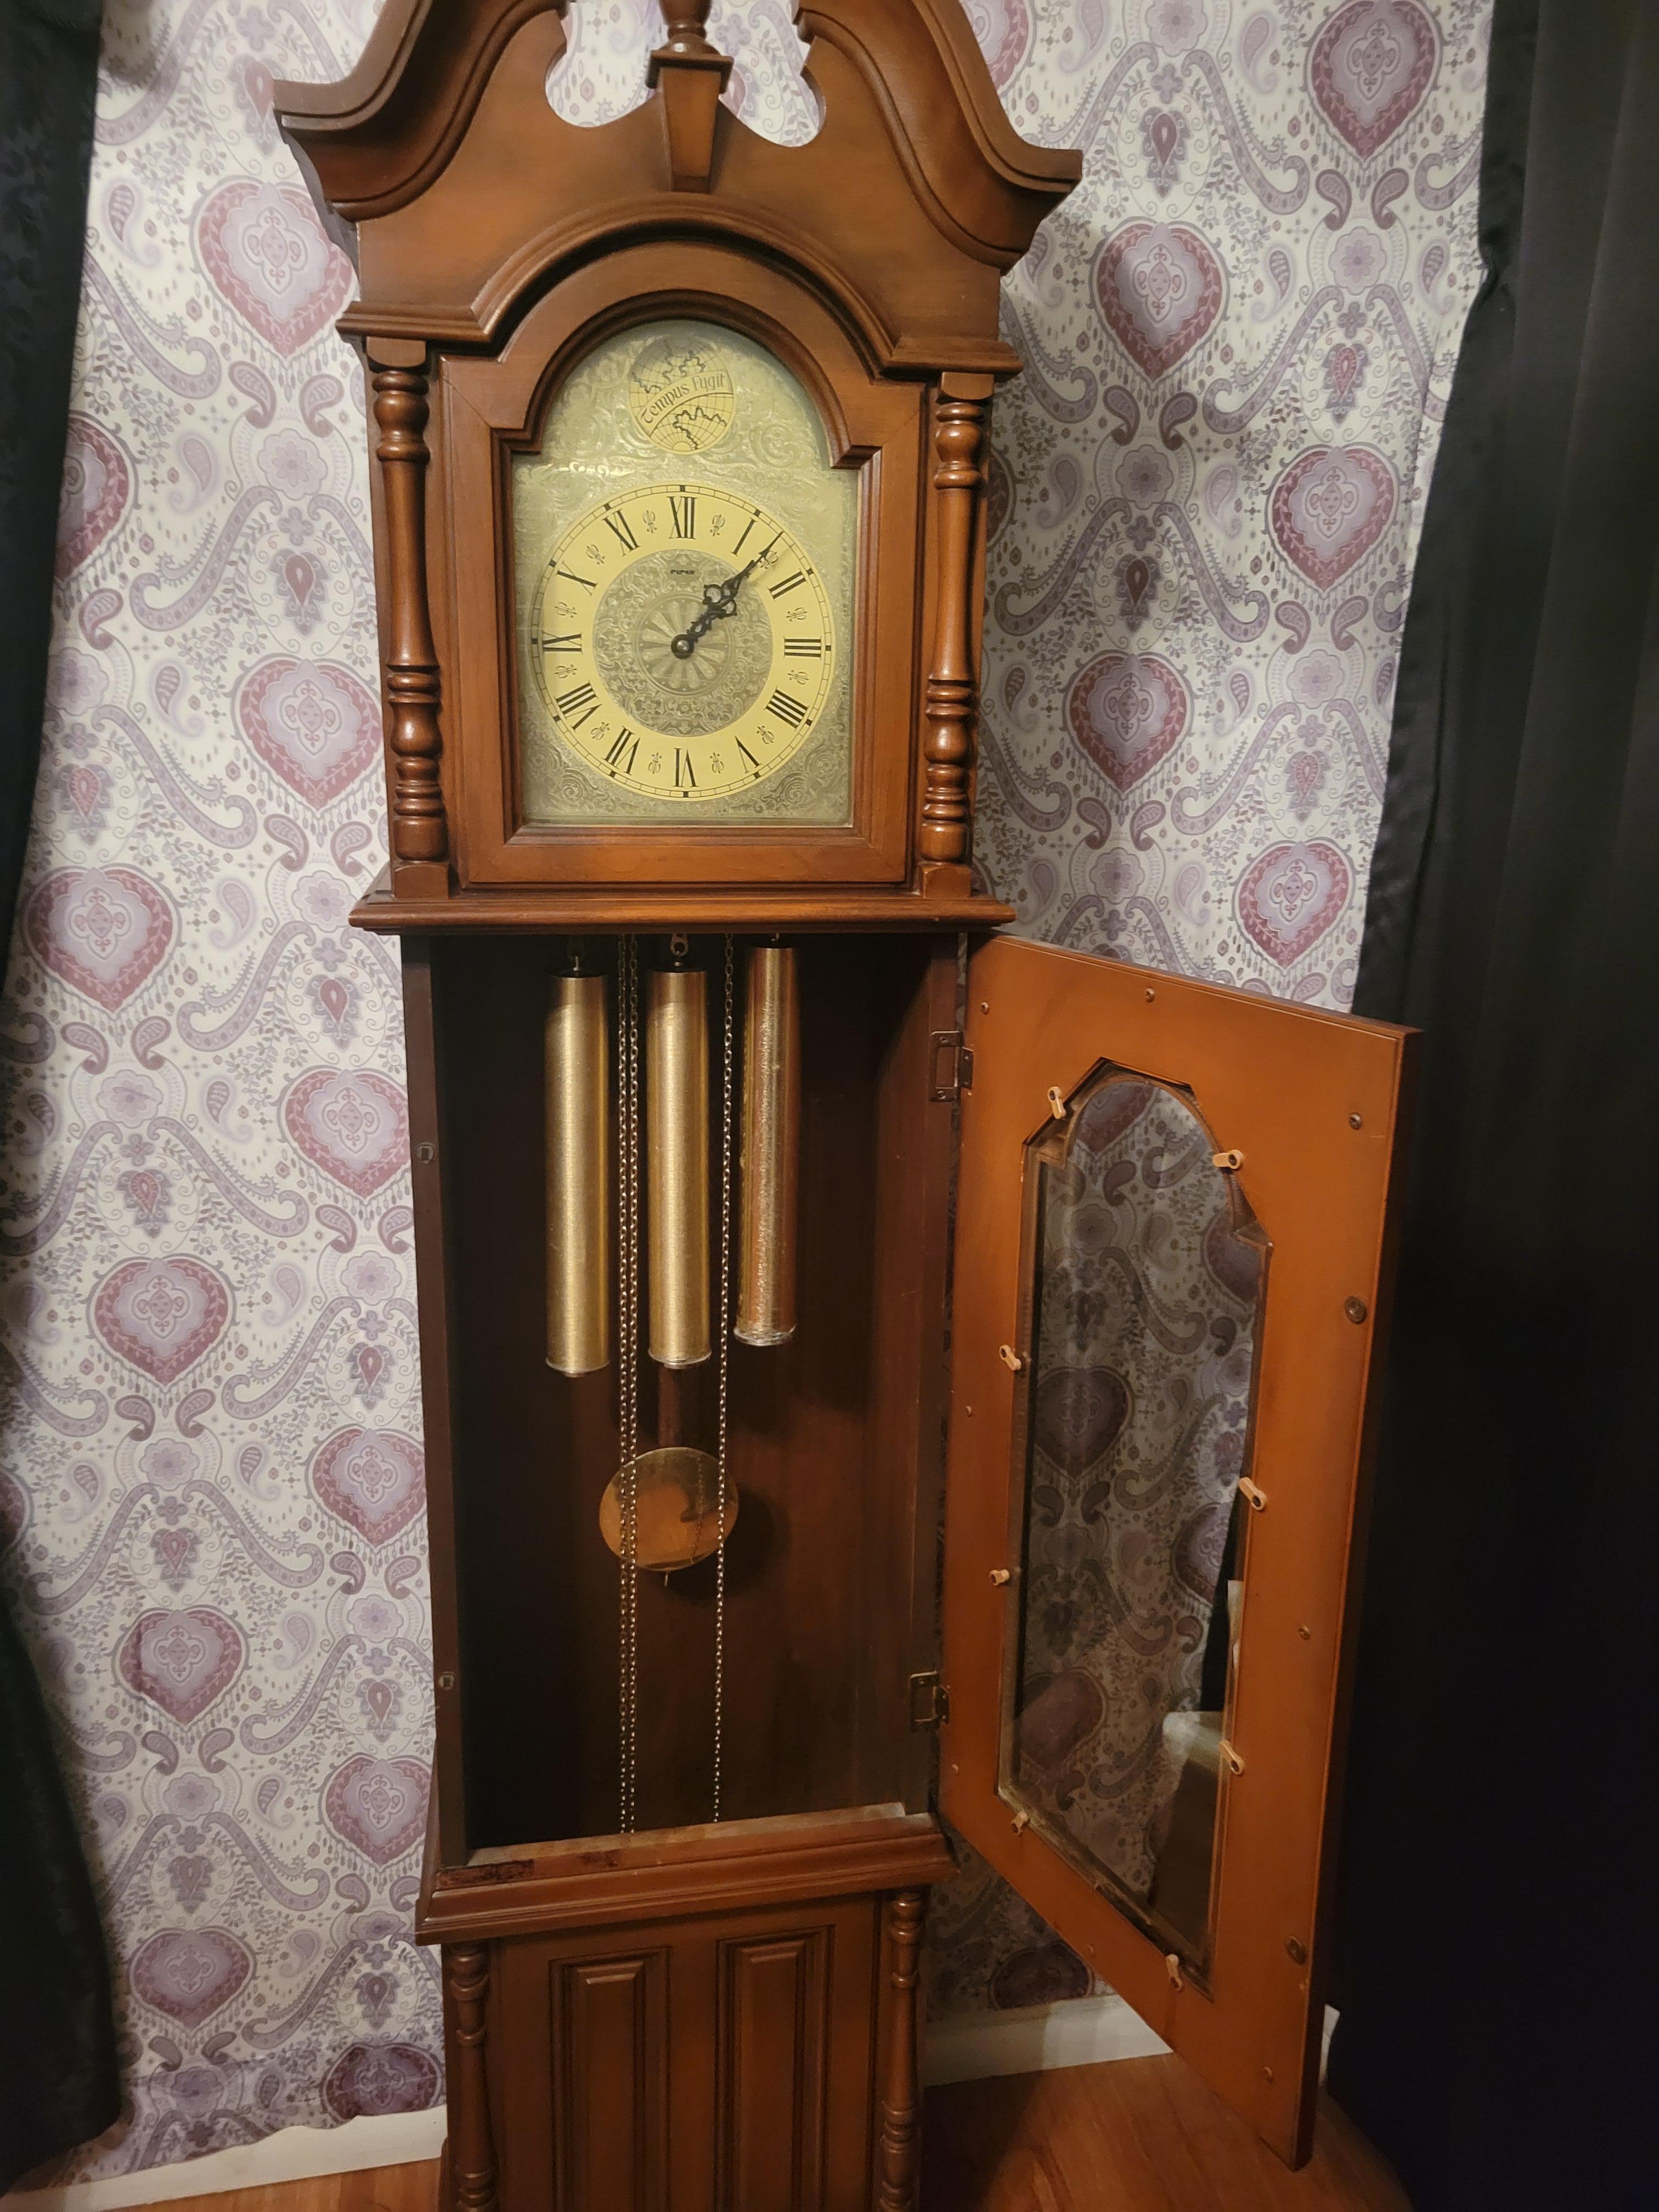 hermle tempus fugit grandfather clock